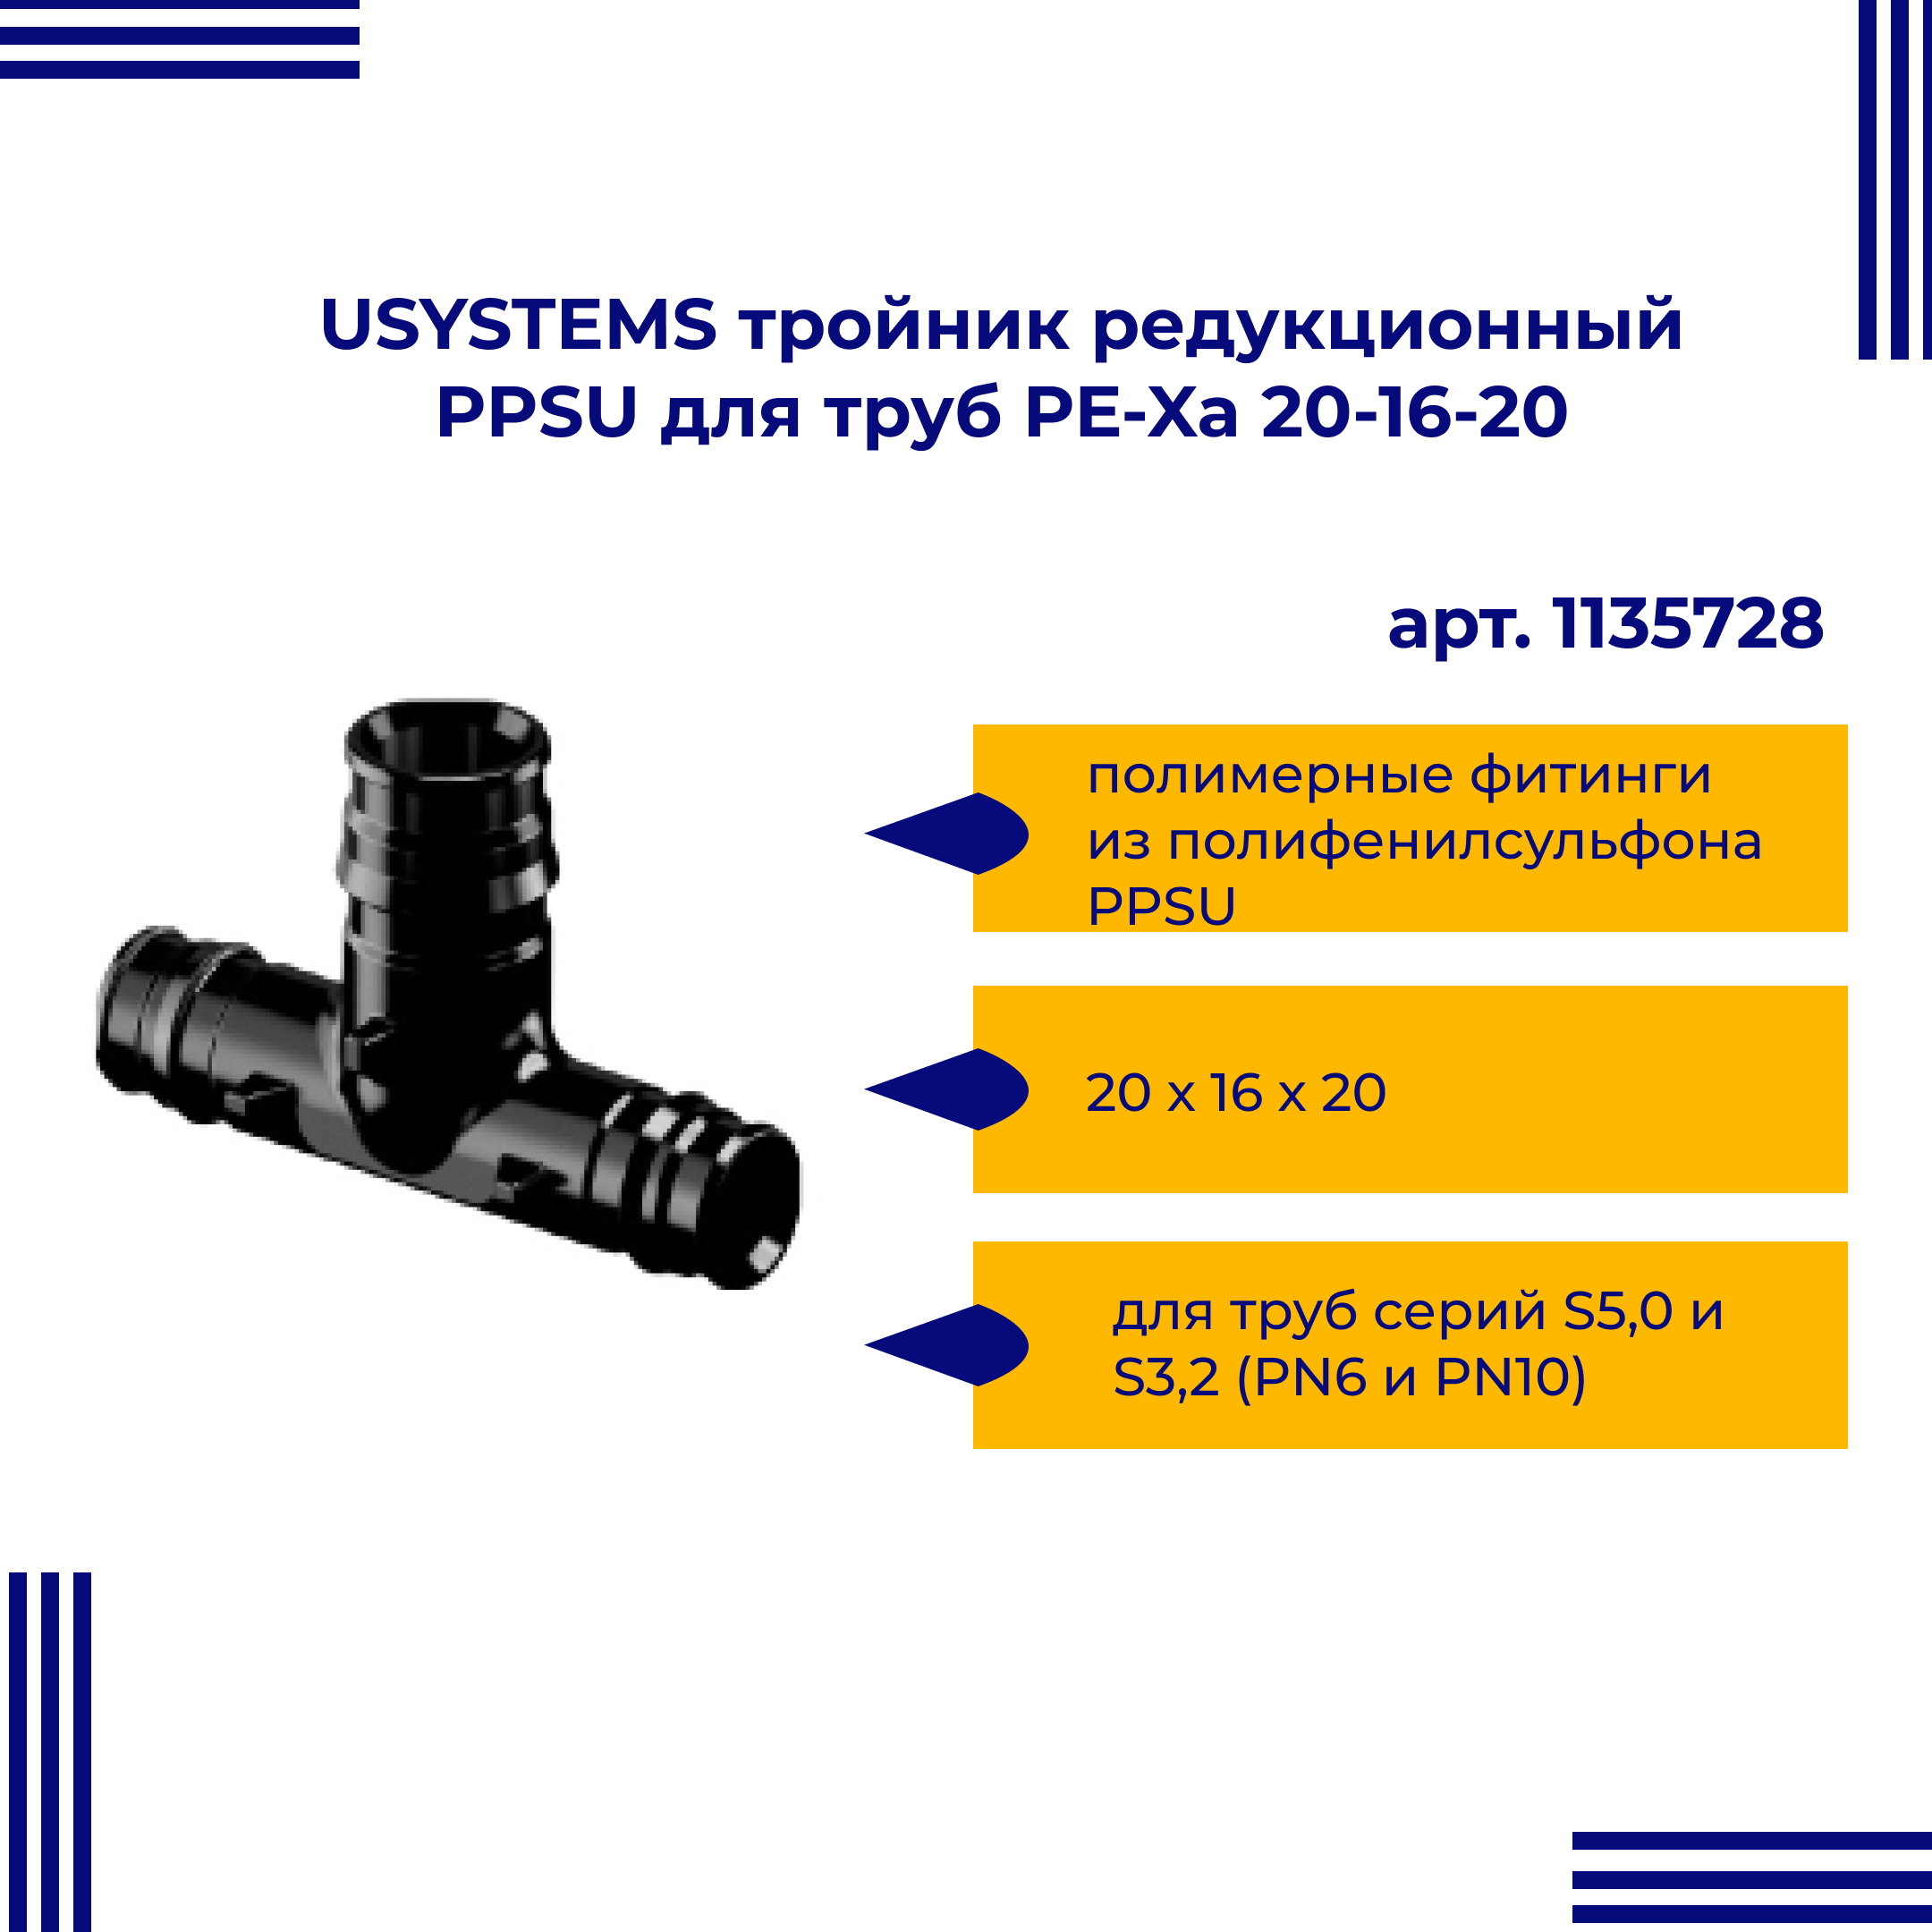 Тройник PPSU USYSTEMS редукционный для труб PE-Xa 20-16-20 1135728